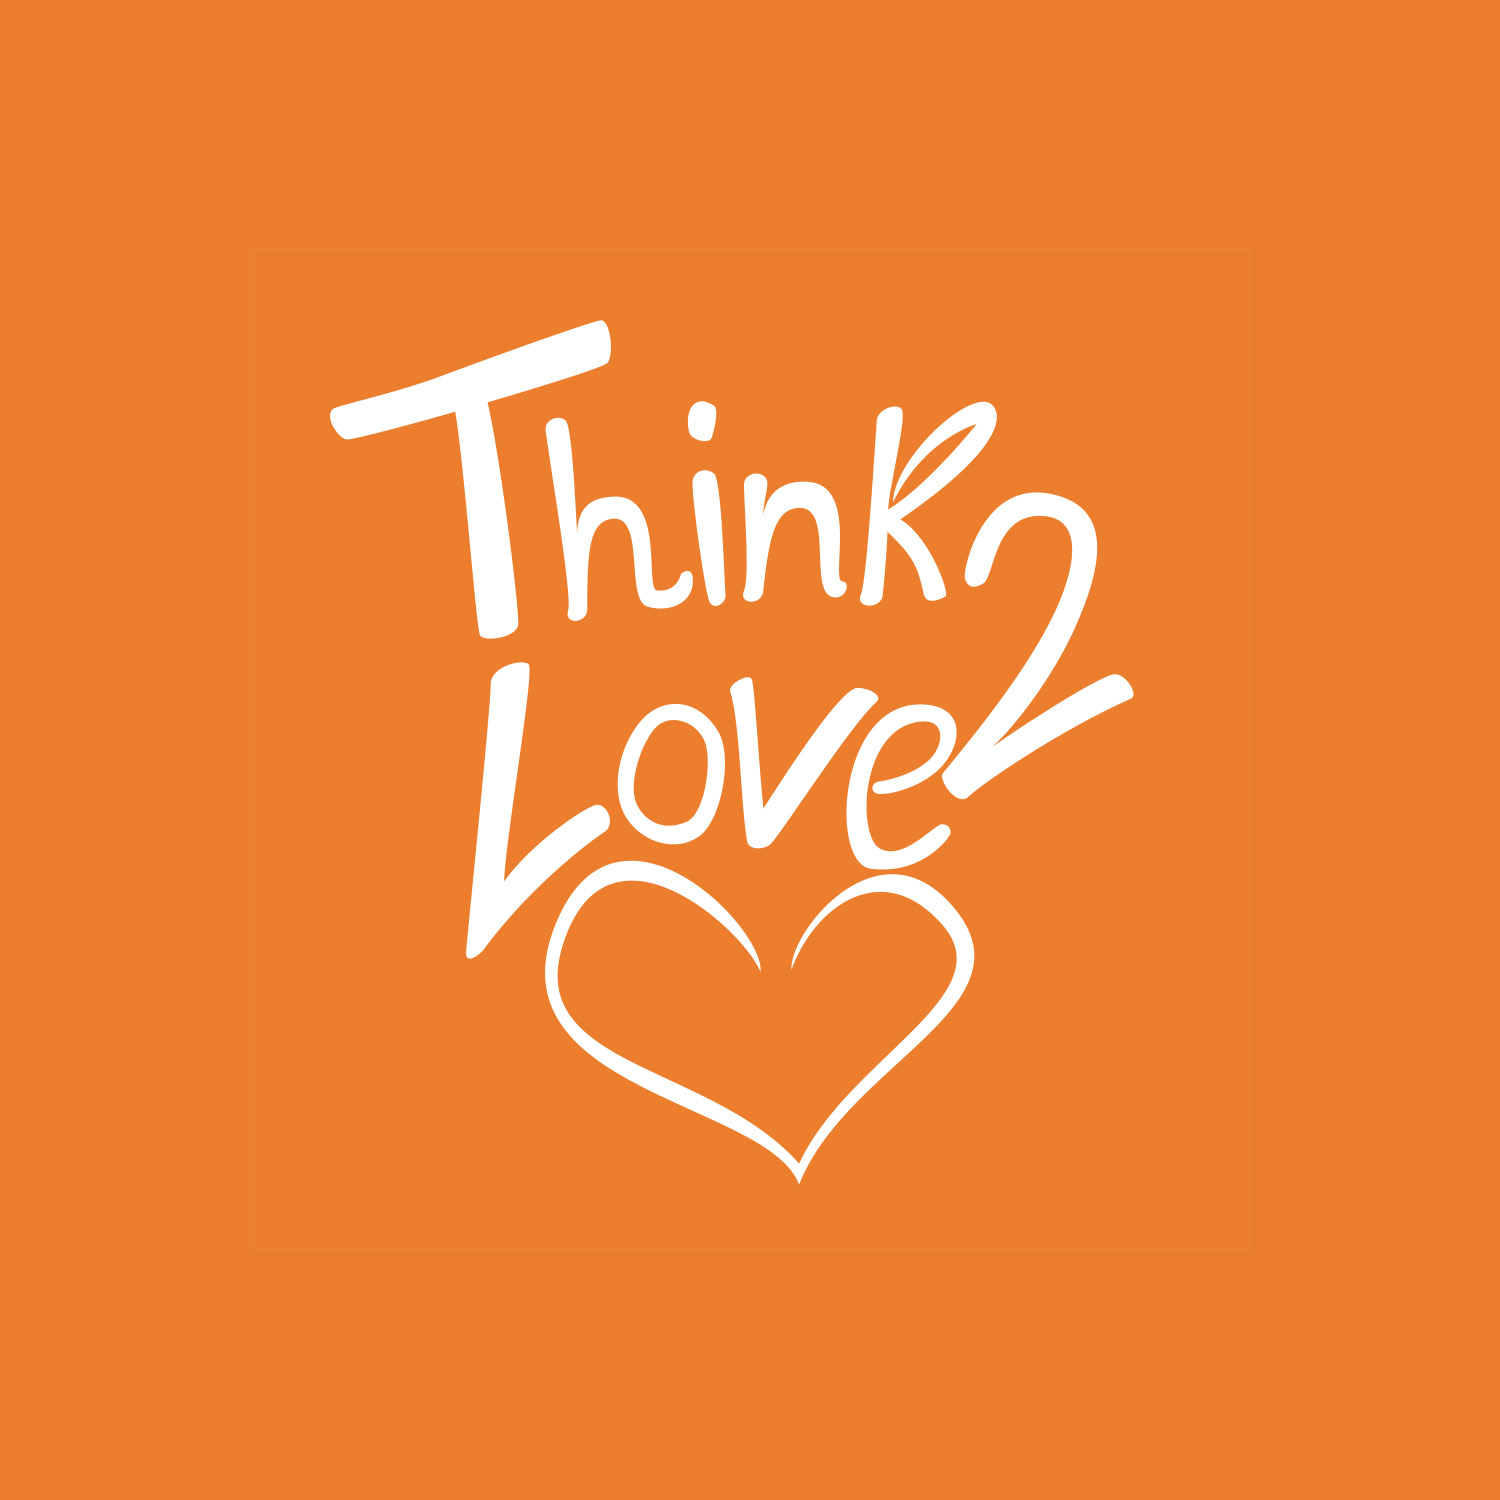 Think and Love. Think 2. И тхинк а Лове Биб. I Love not thinking.